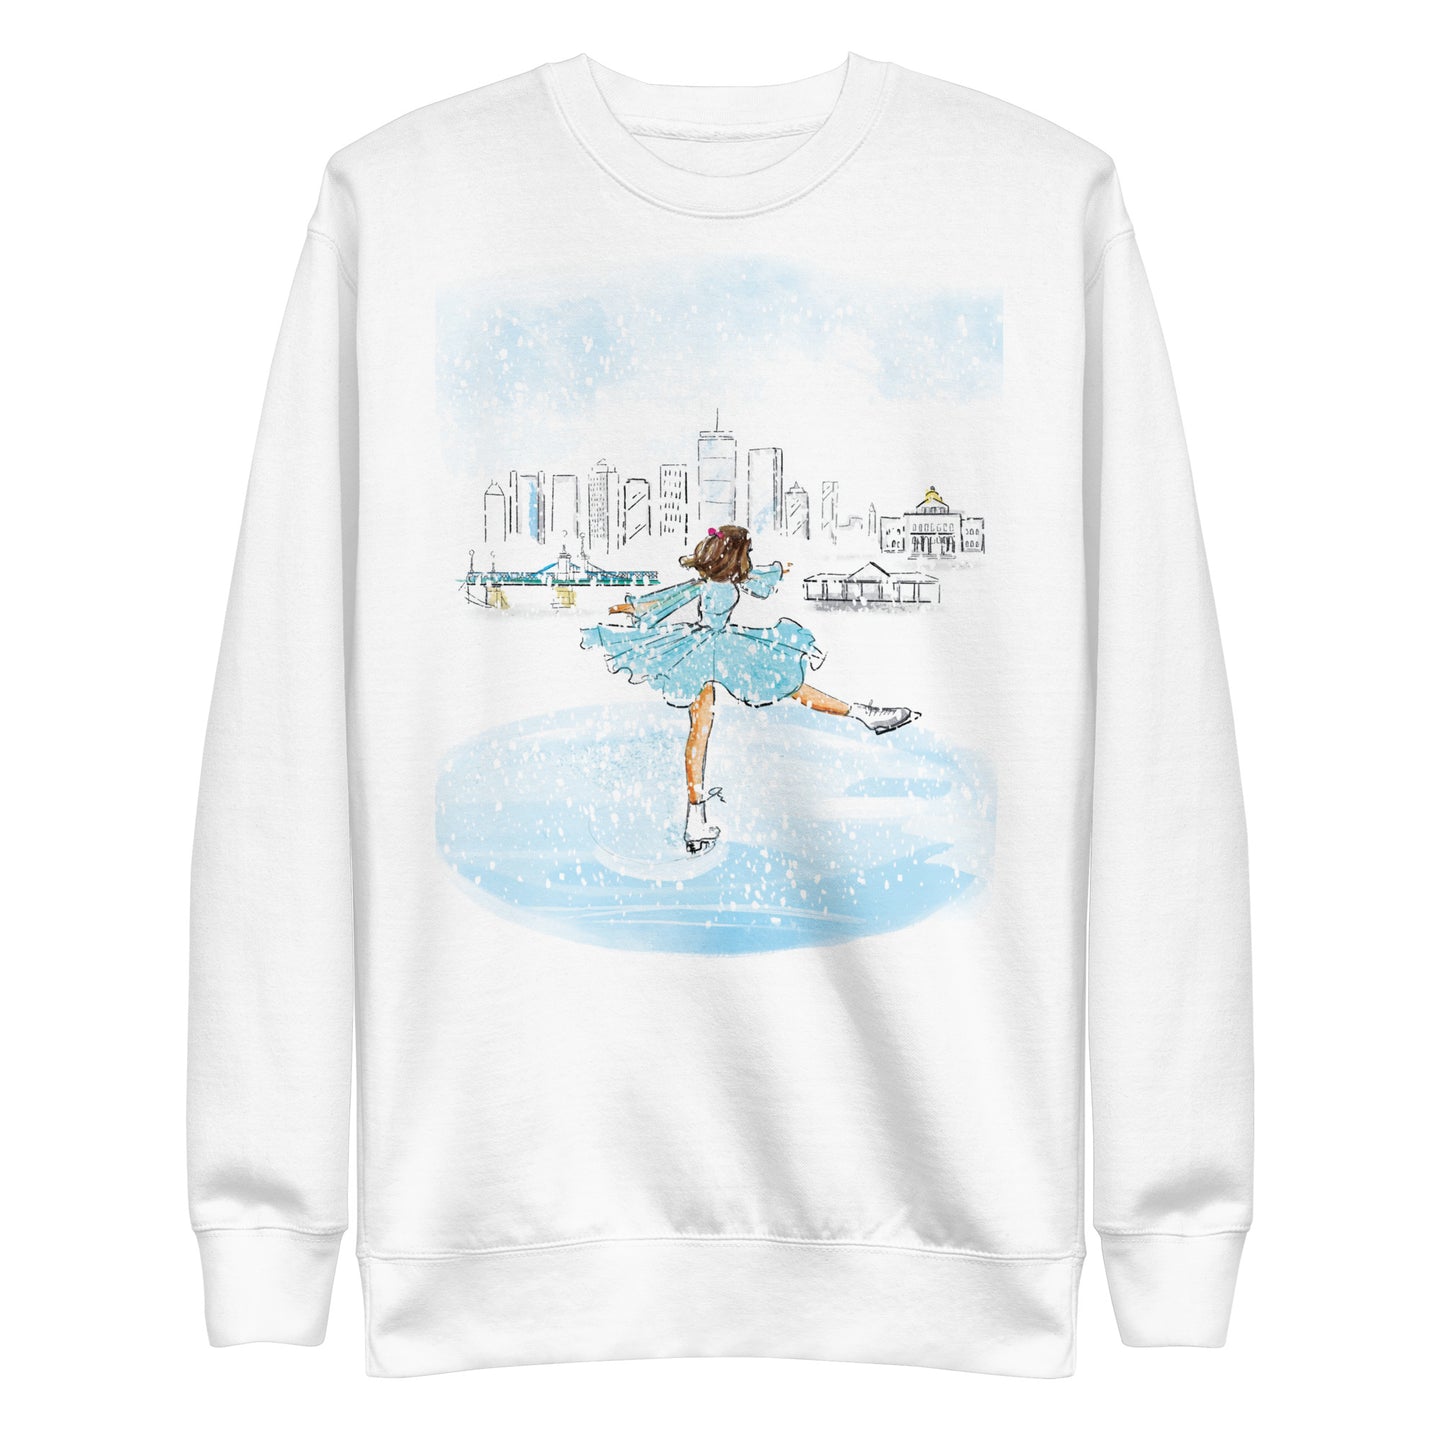 The Skater Premium Sweatshirt (Brunette)